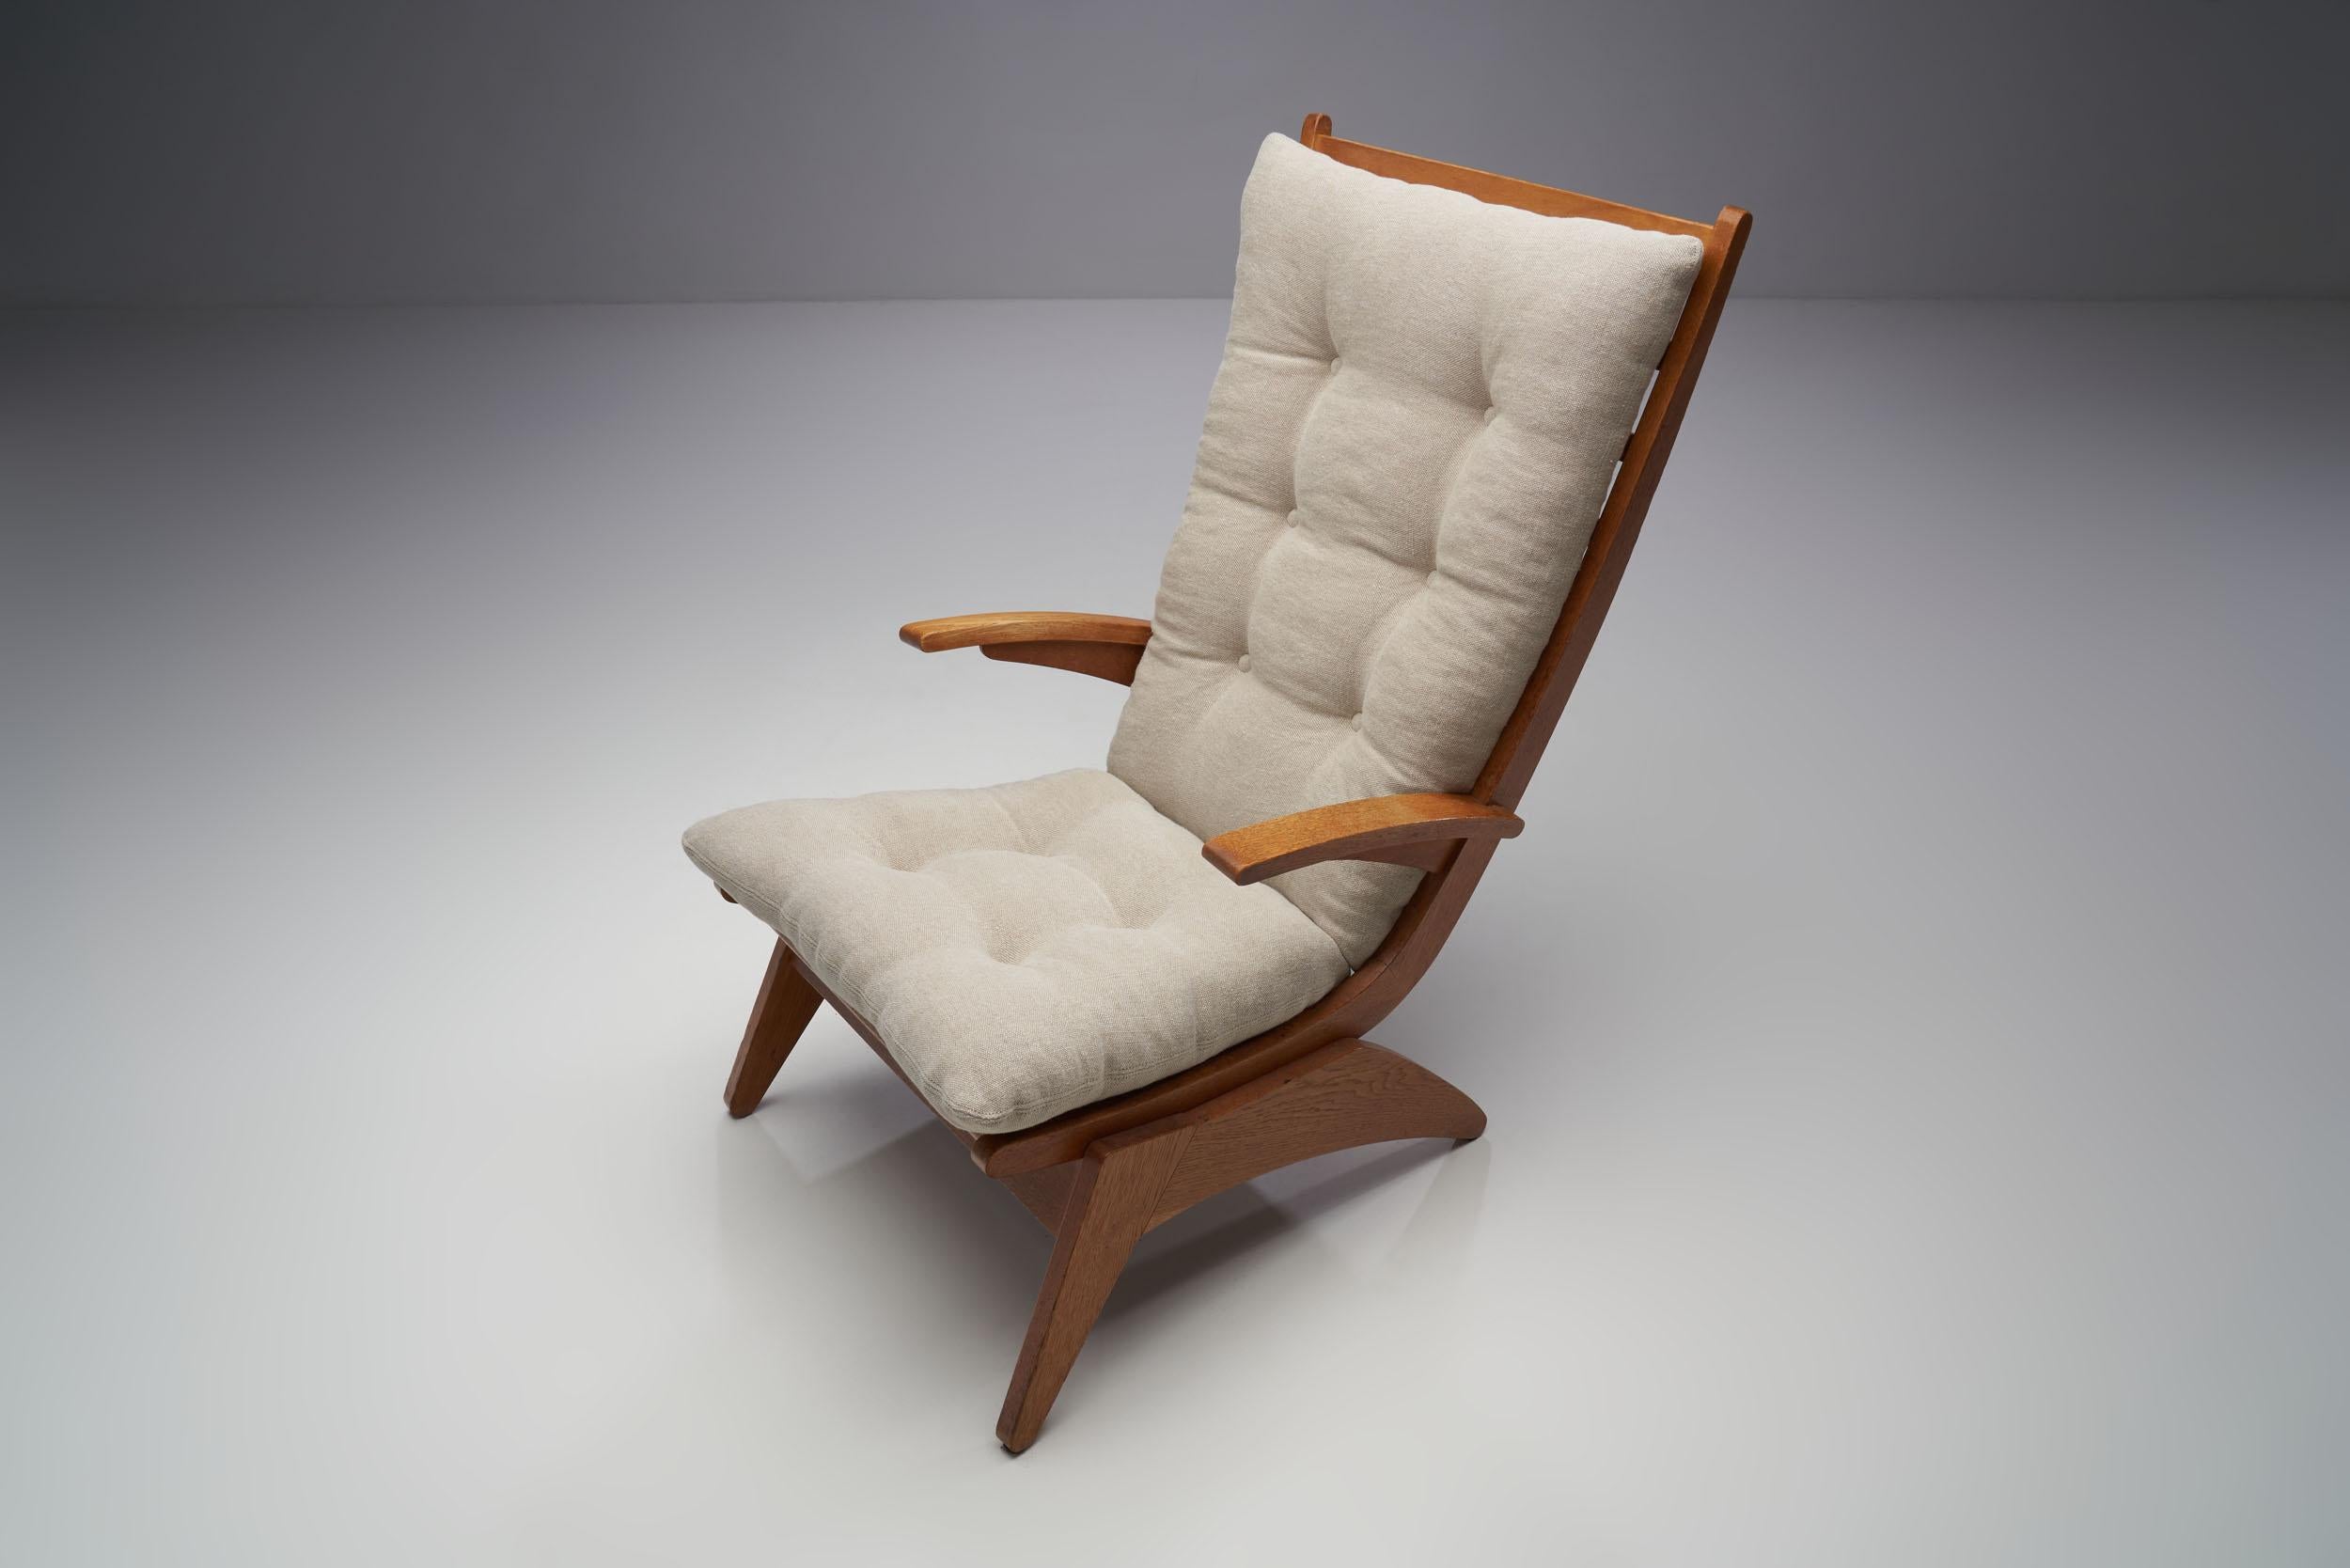 Fabric Dutch Modern High Back Chair by Jan den Drijver for De Stijl, The Hague 1950s For Sale